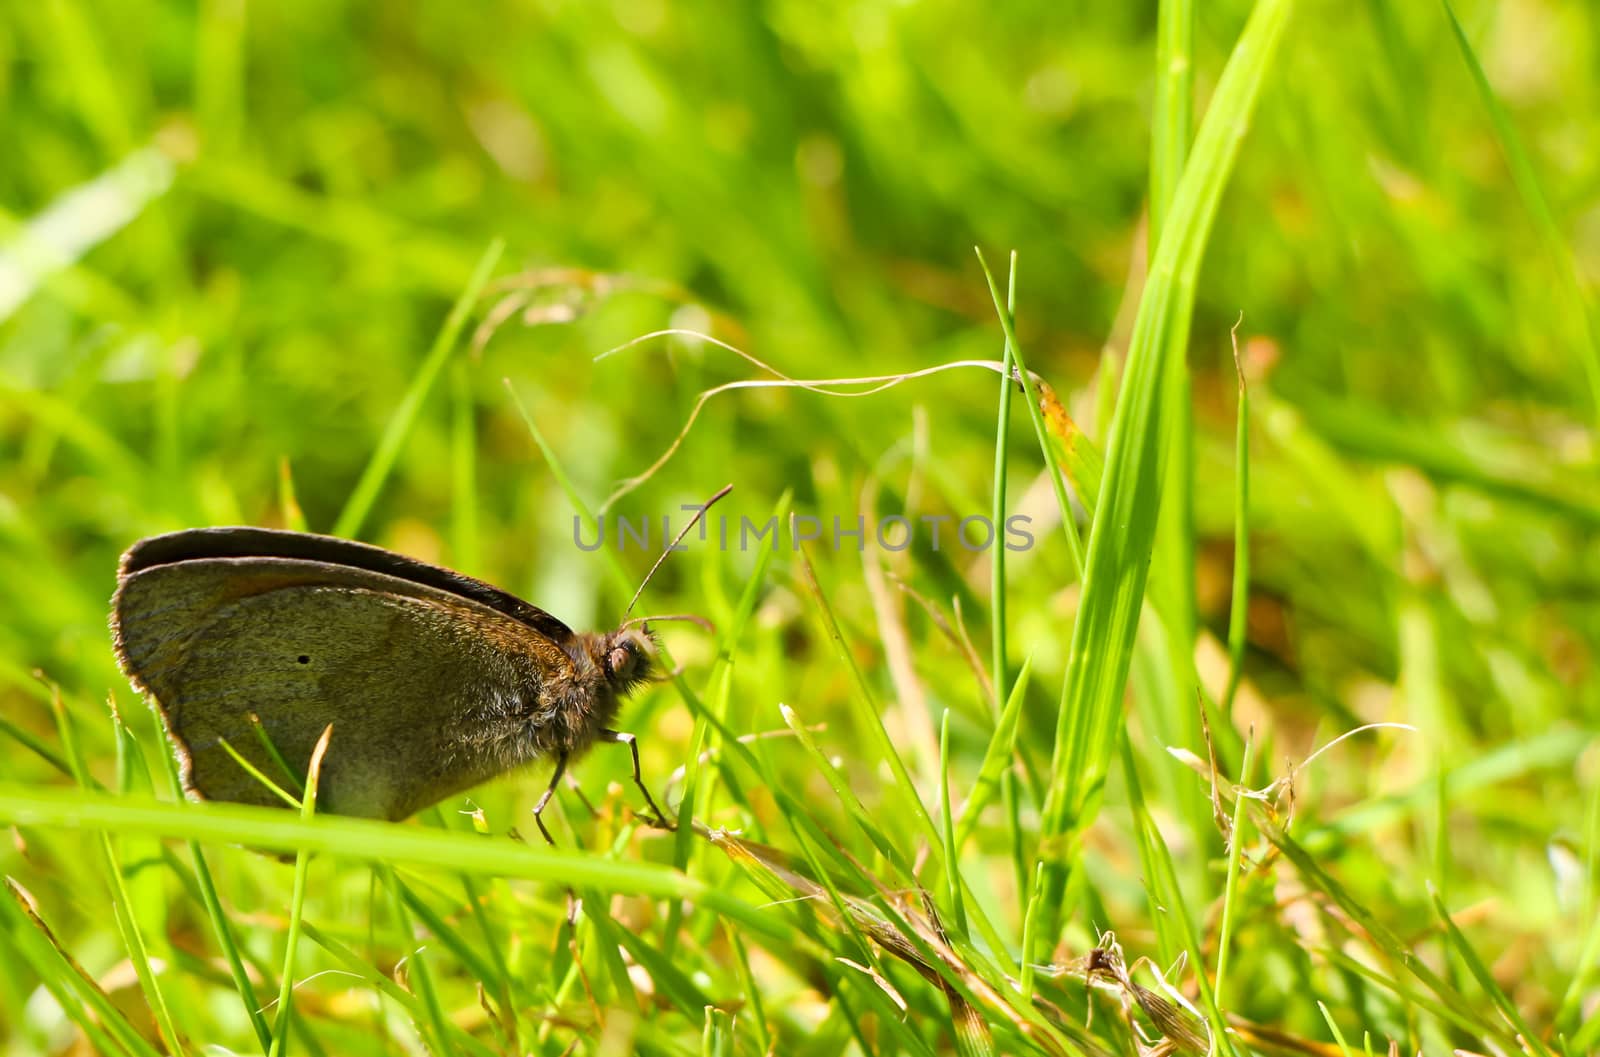 Moth sitting on Grass by Mads_Hjorth_Jakobsen